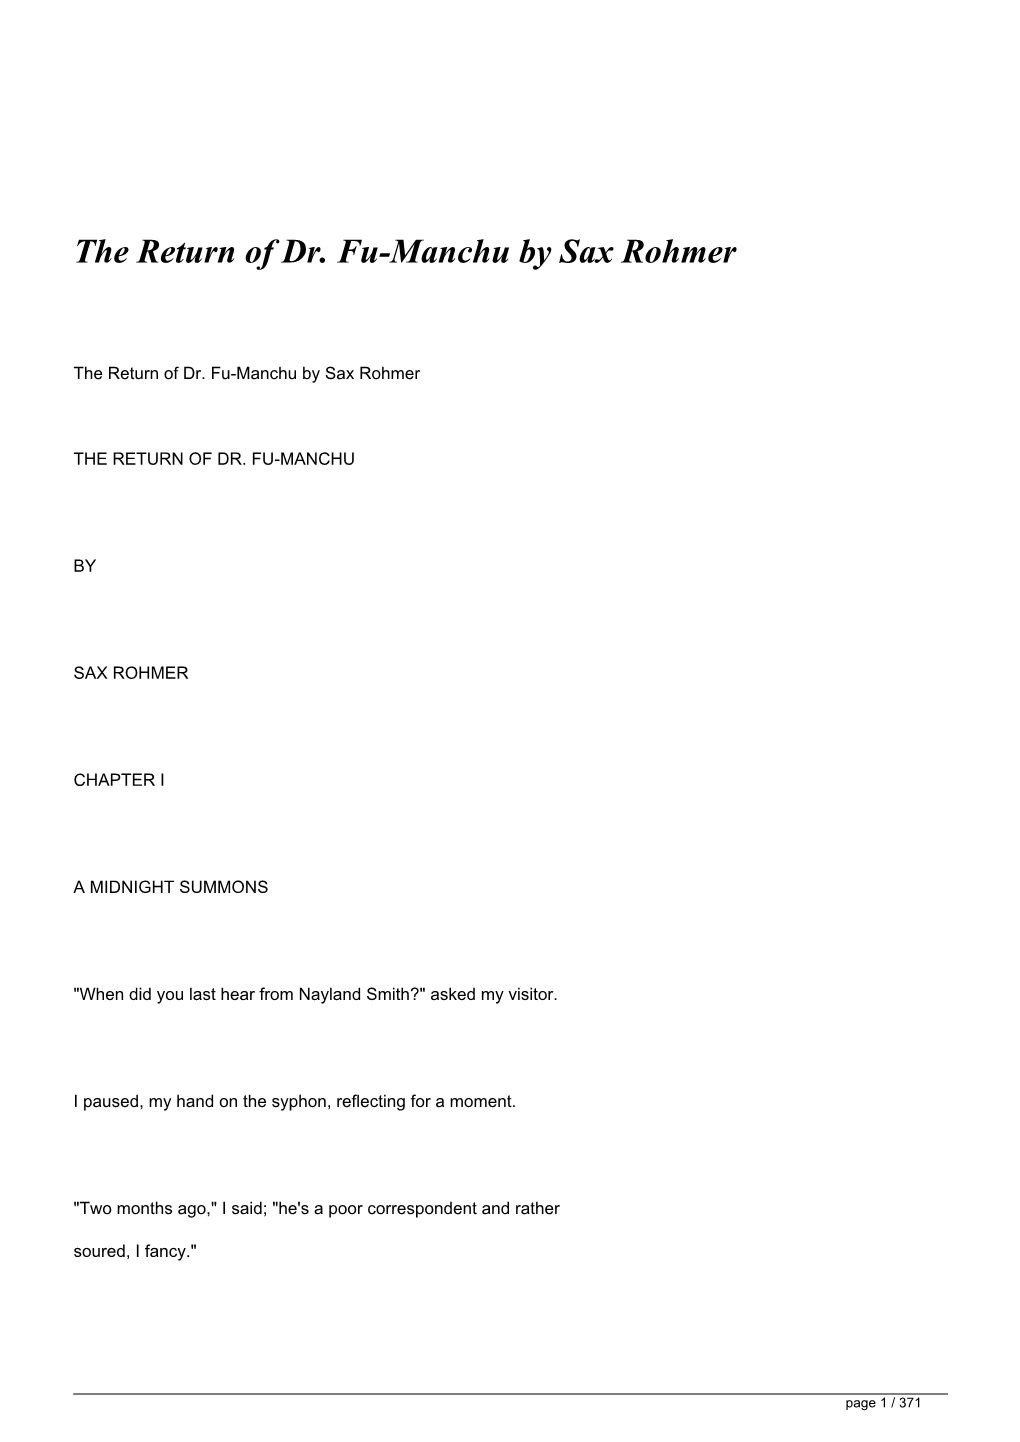 The Return of Dr. Fu-Manchu by Sax Rohmer&lt;/H1&gt;